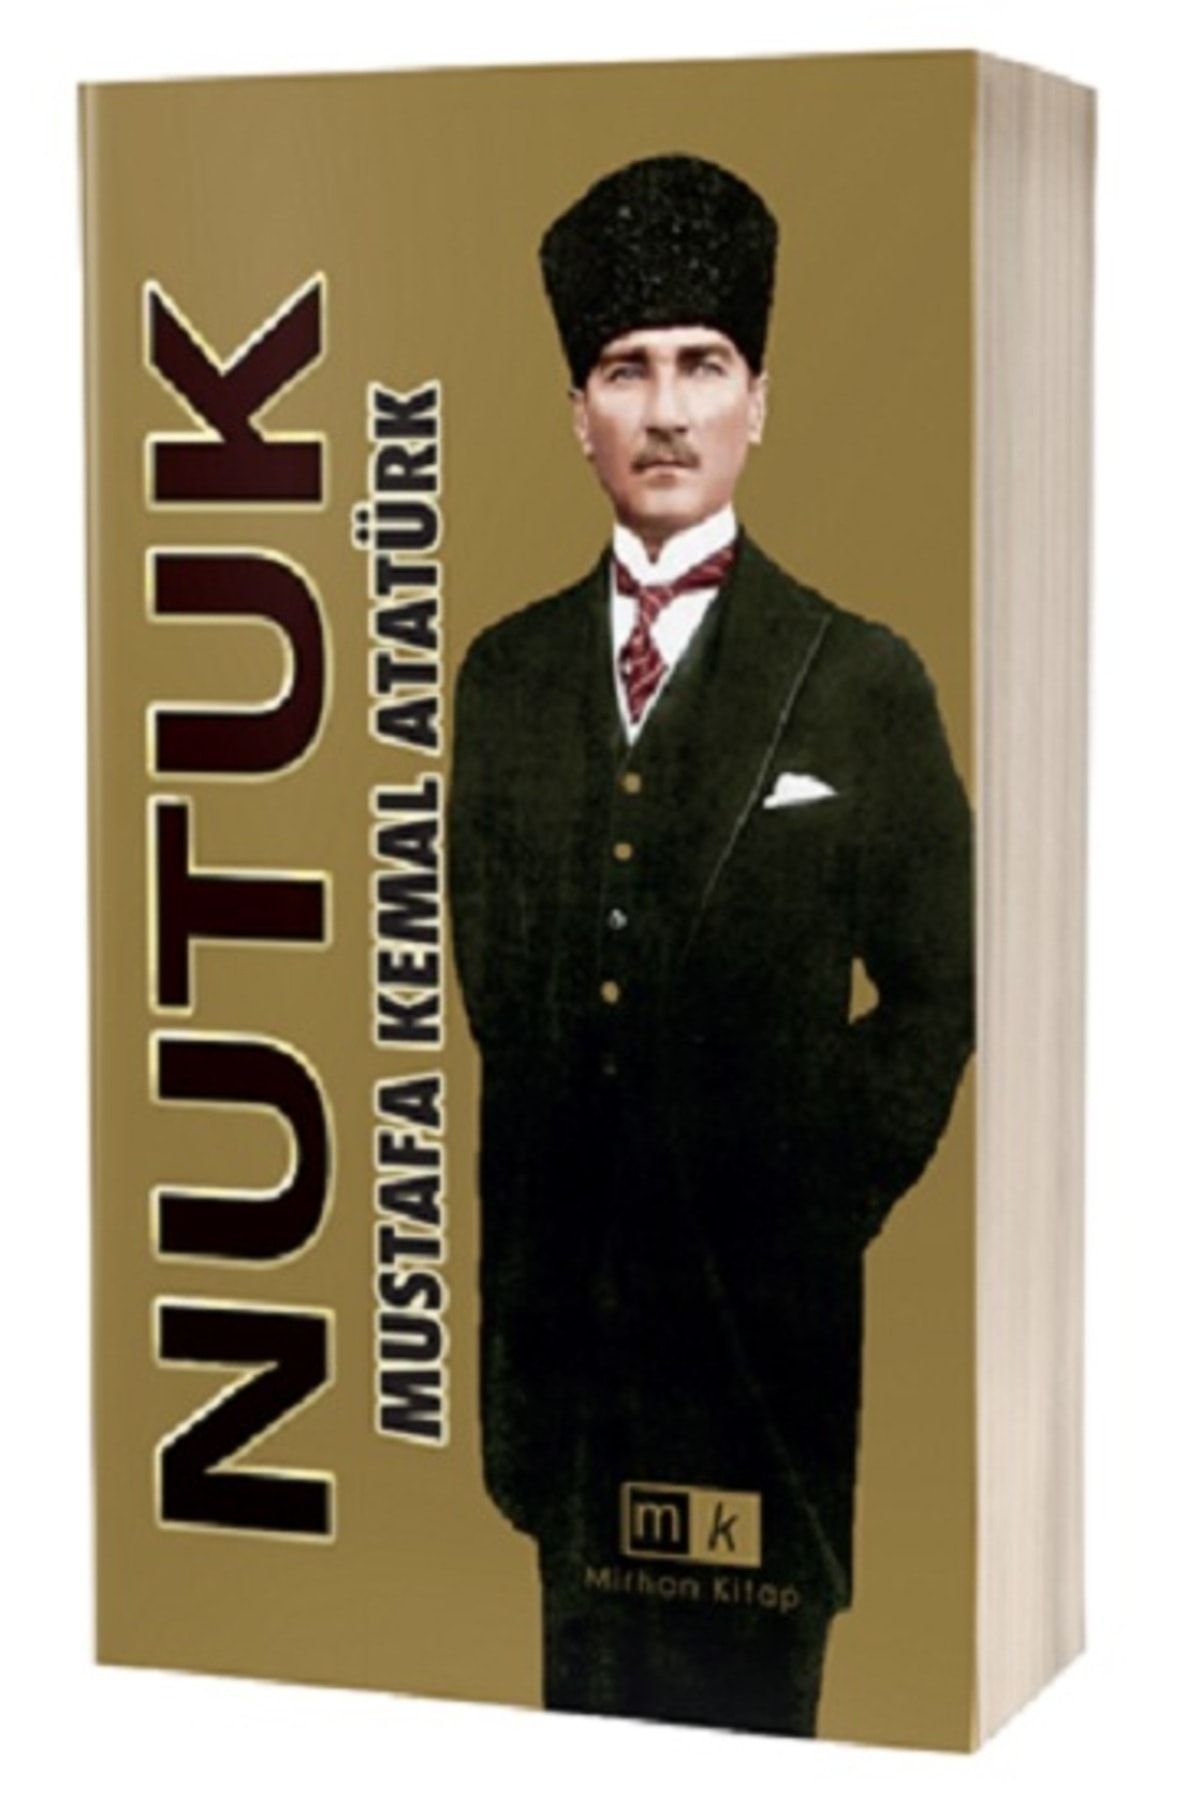 Mirhan Kitap Nutuk kitabı - Mustafa Kemal Atatürk - Mirhan Kitap